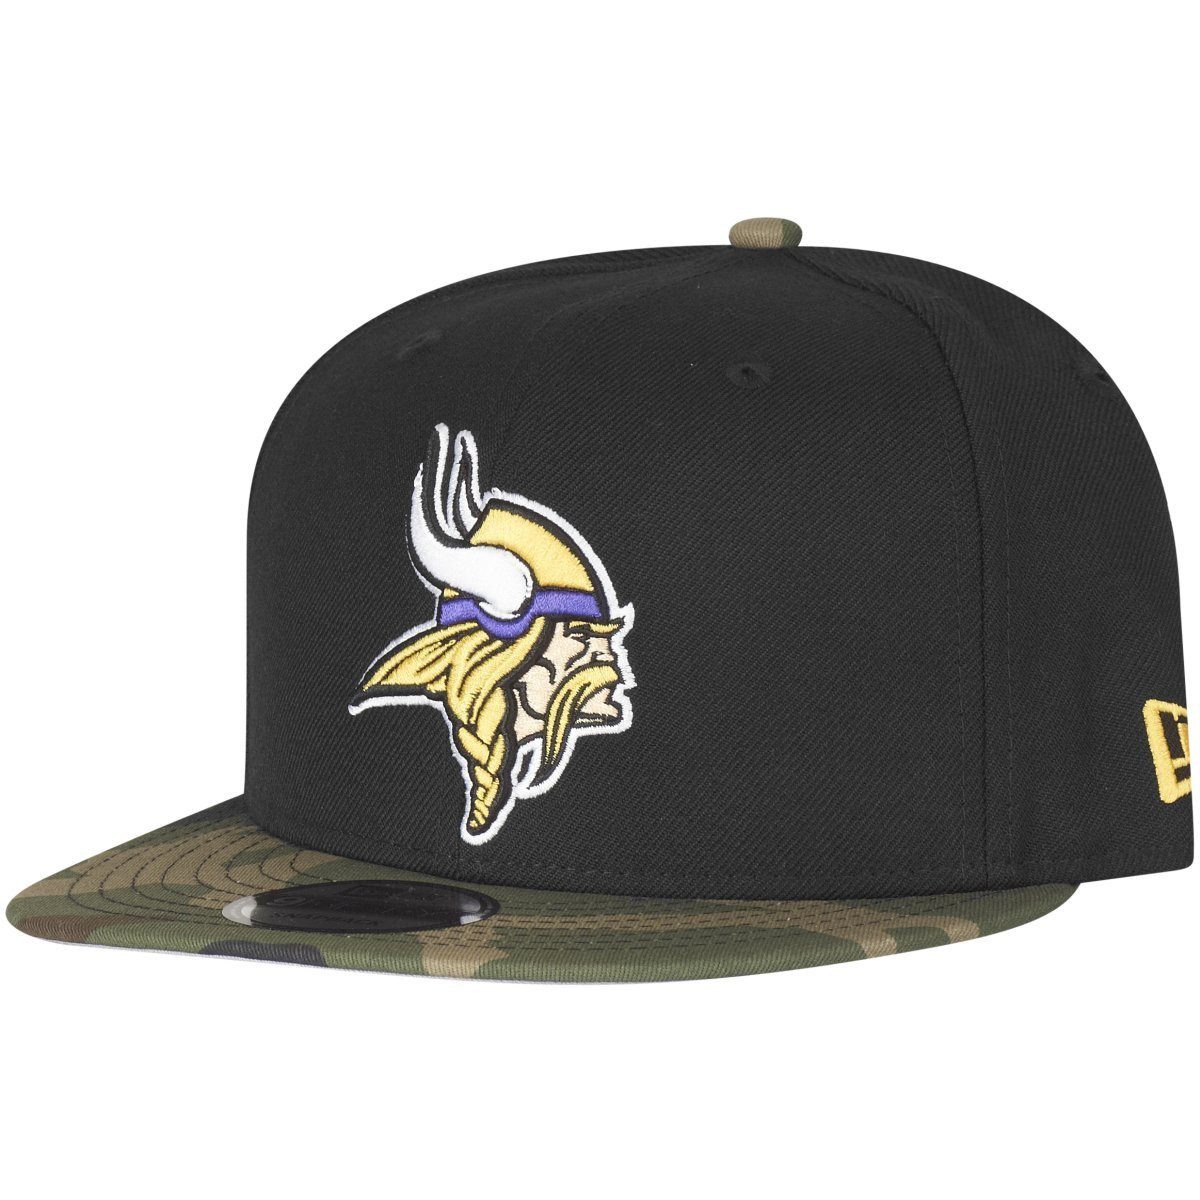 New Era Snapback Cap 9Fifty Minnesota Vikings